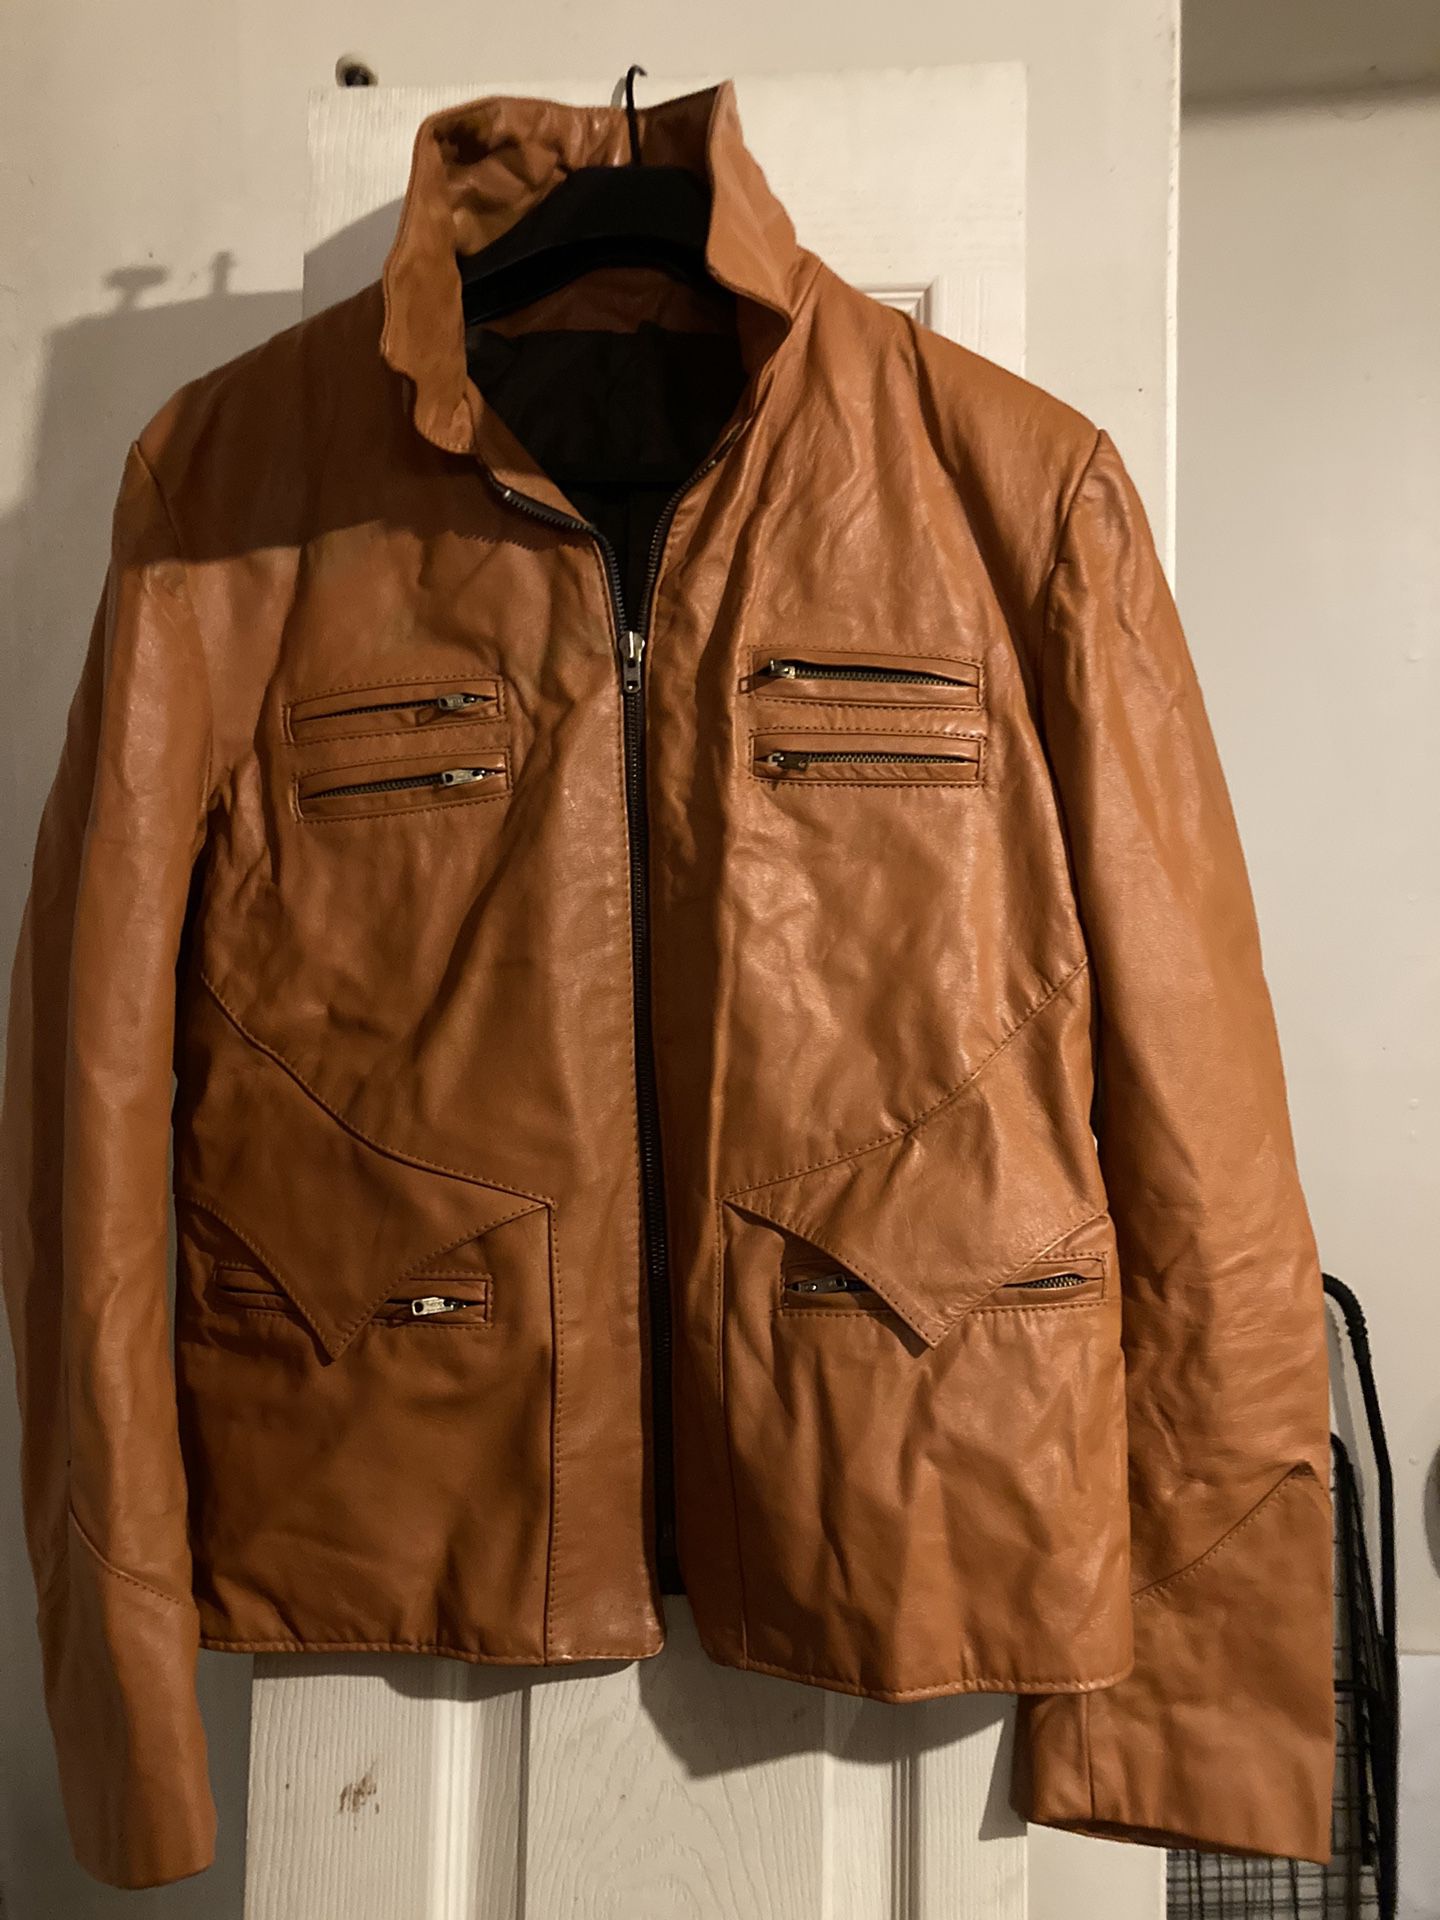 Vintage Nutmeg Colored Leather Jacket Size Medium